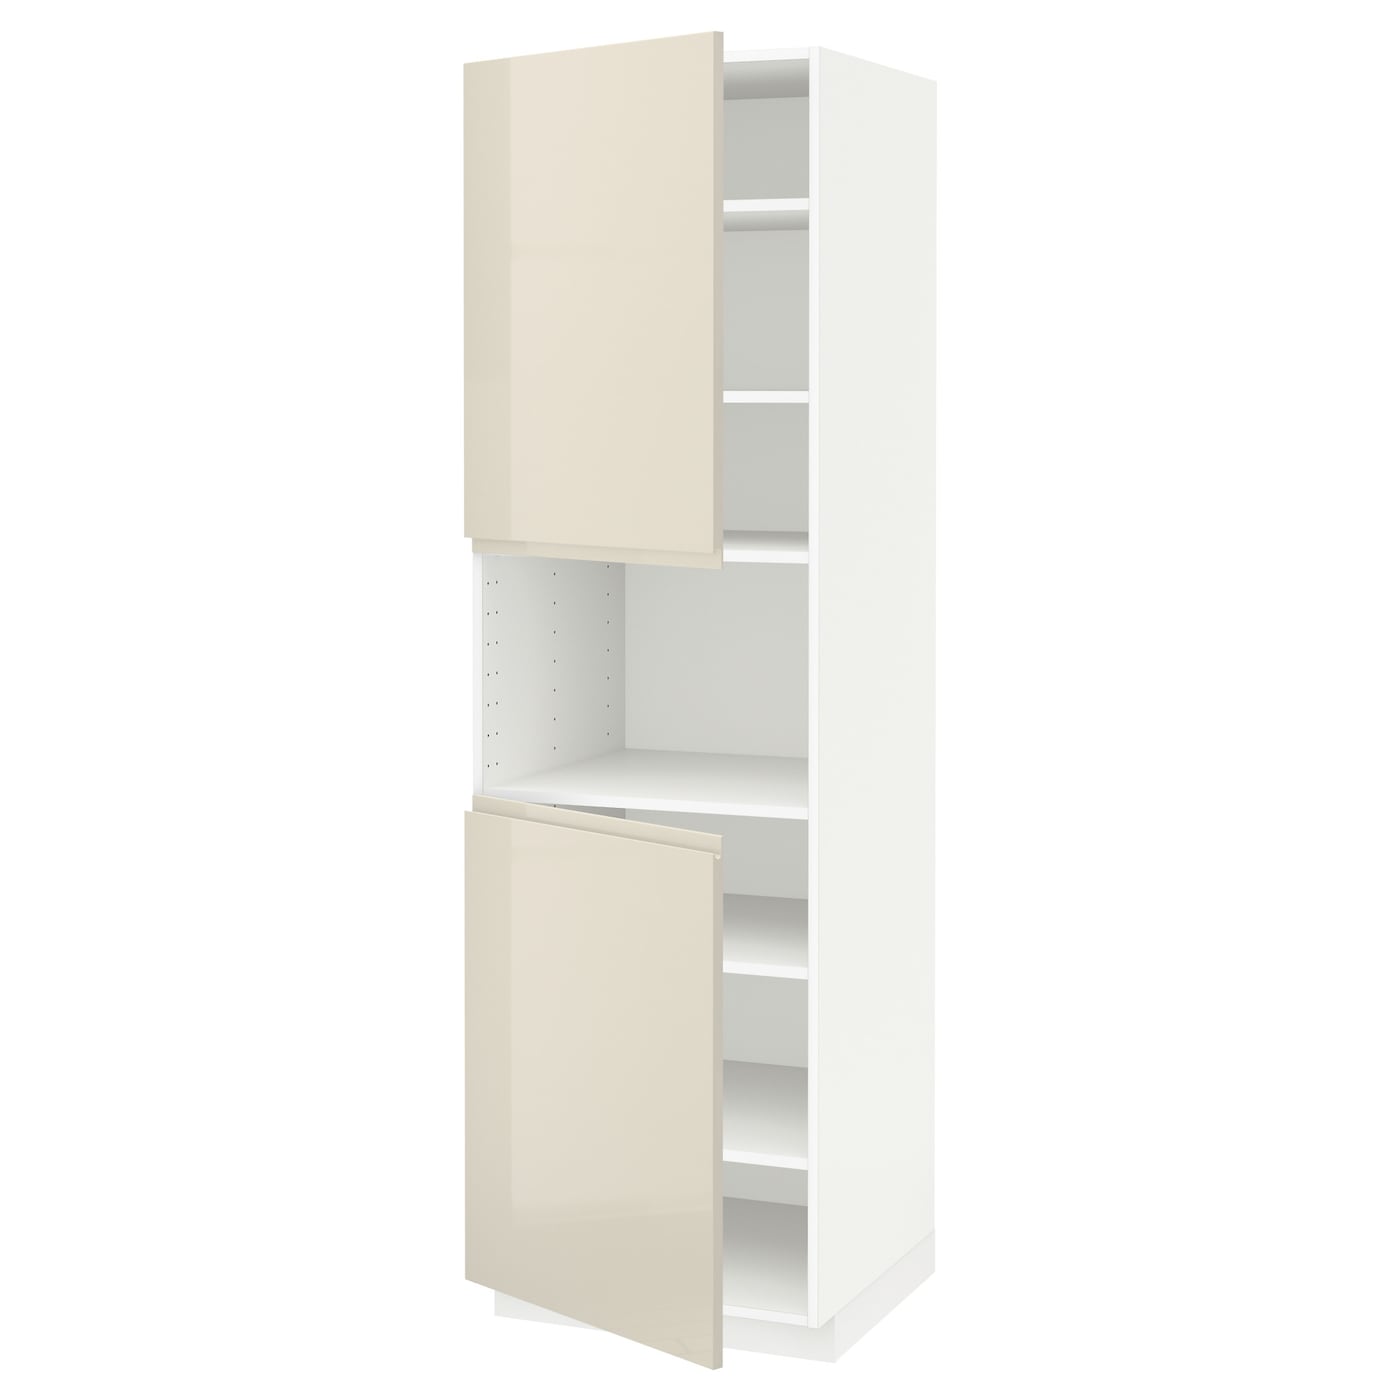 Высокий кухонный шкаф с полками - IKEA METOD/МЕТОД ИКЕА, 200х60х60 см, белый/бежевый глянцевый